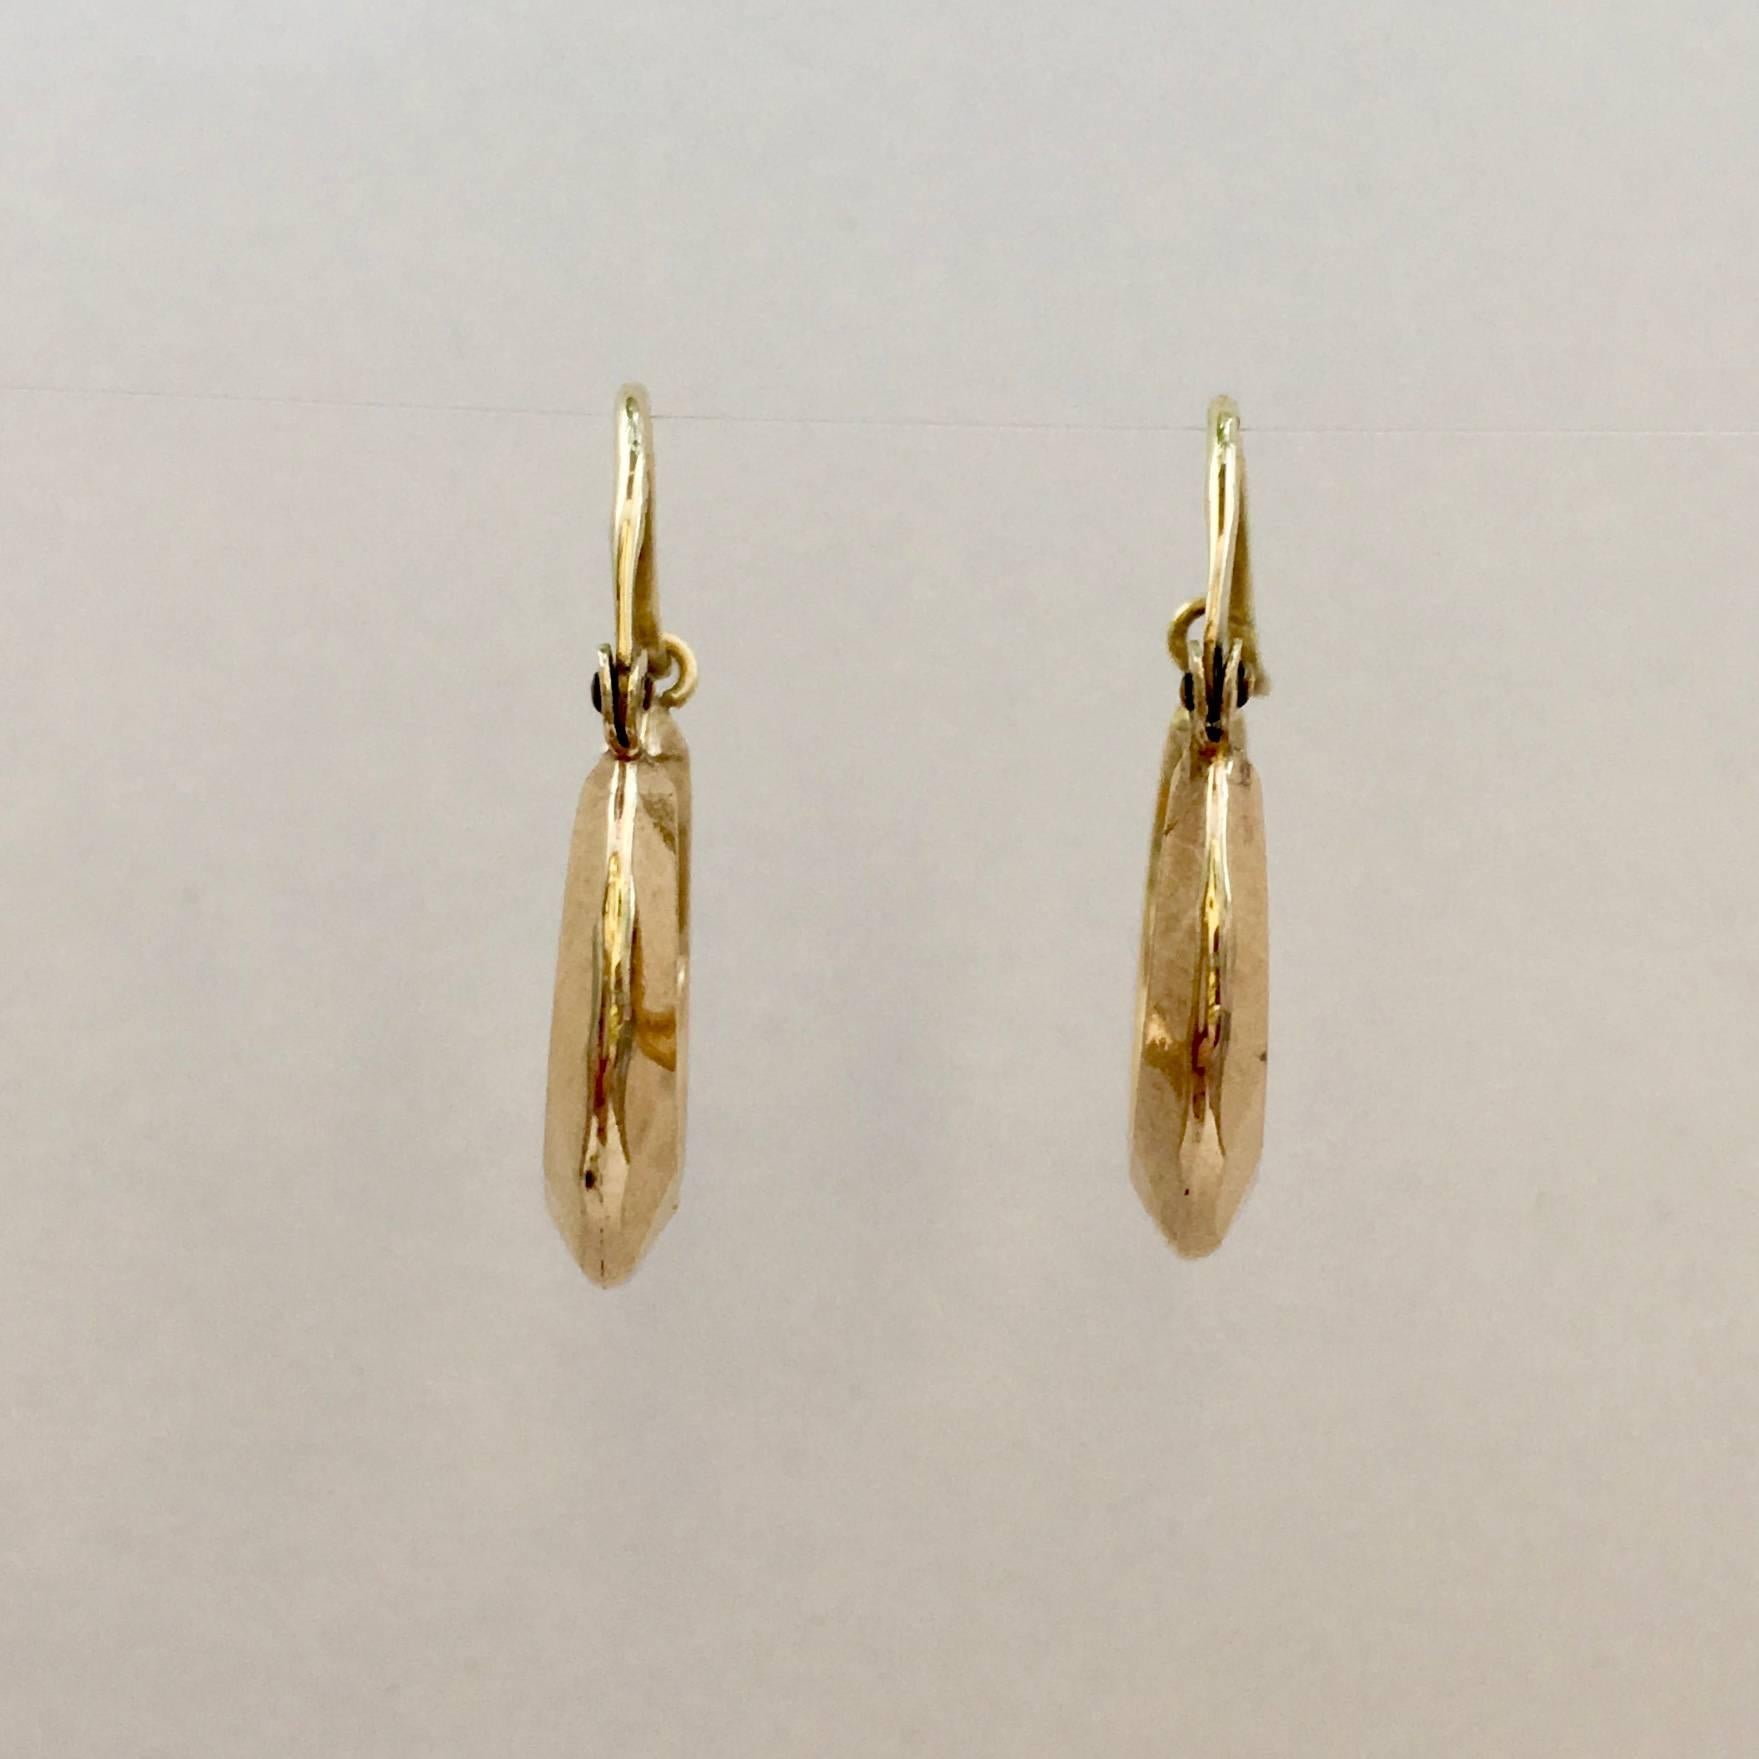 Women's or Men's Small Gold Hoops 1980s Vintage Jewelry Faceted Dainty Hoop Earrings